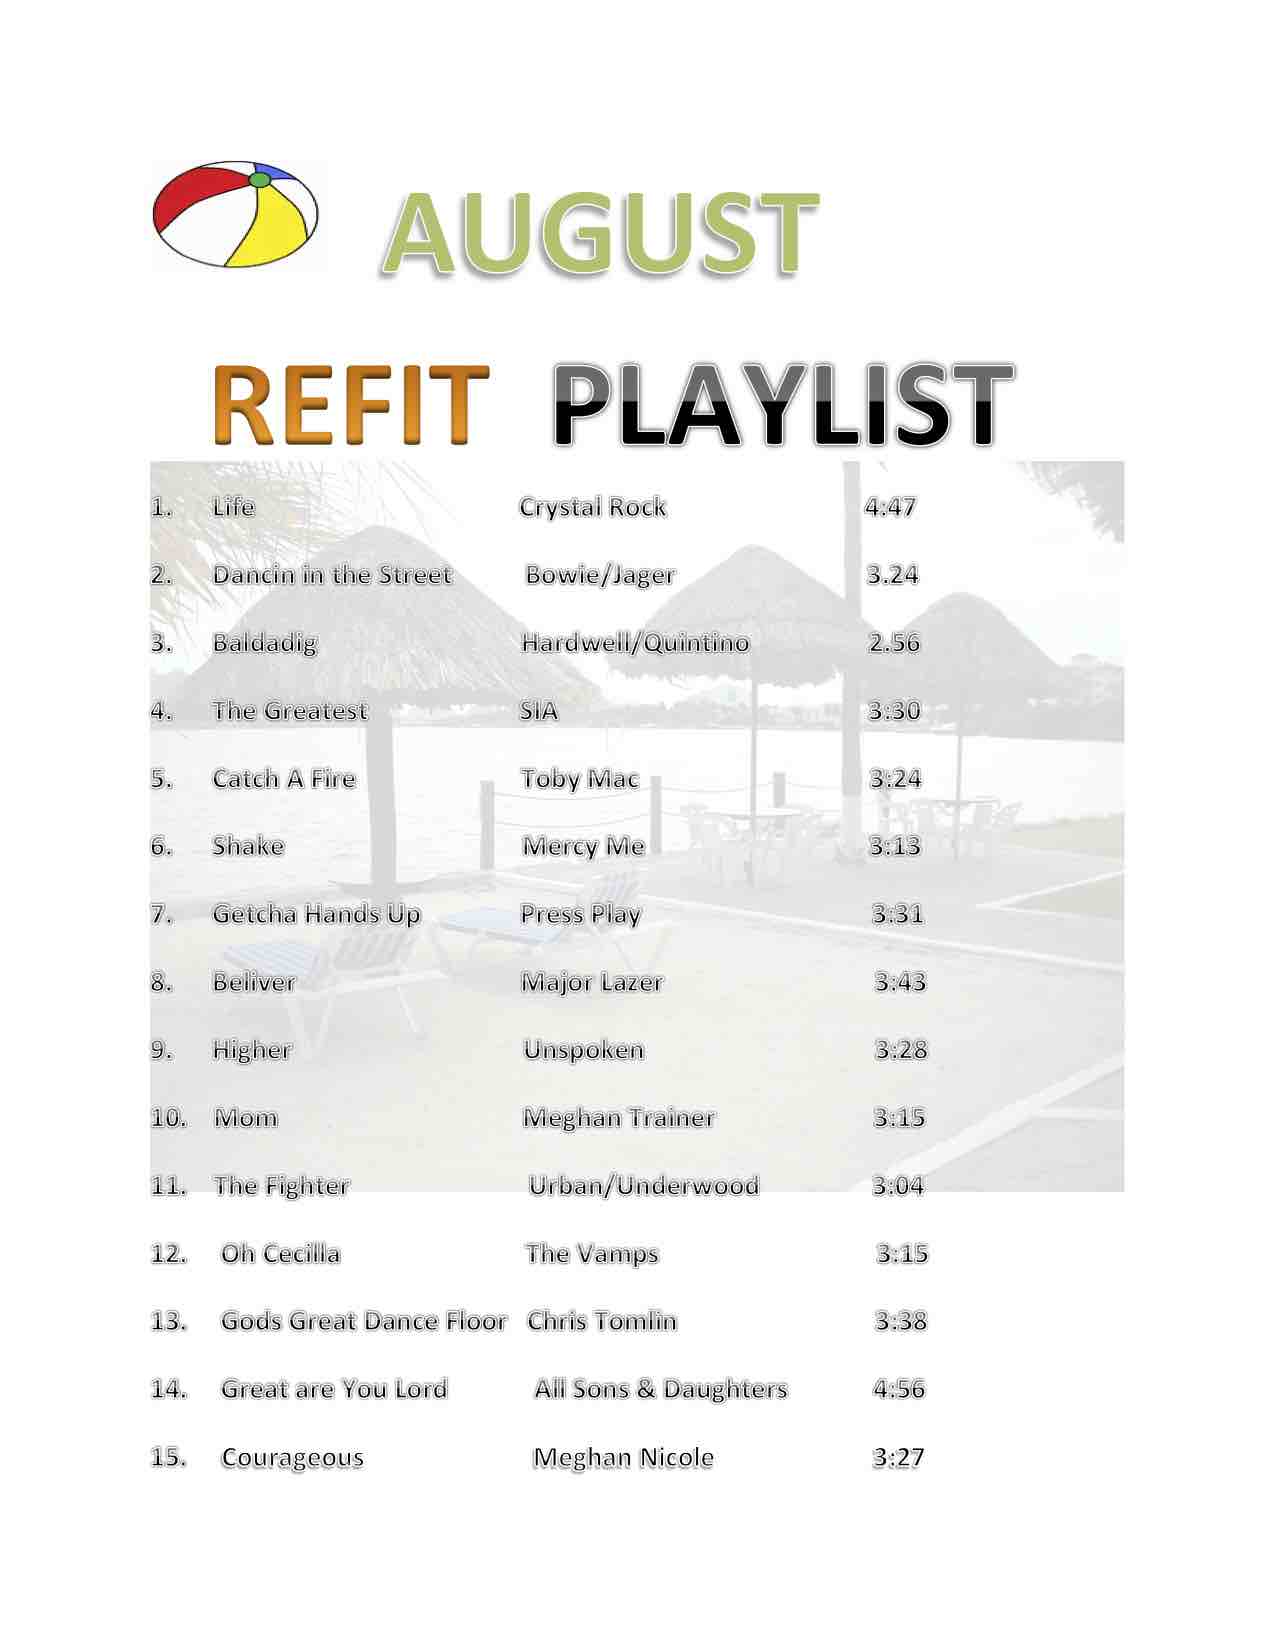 August REFIT play list